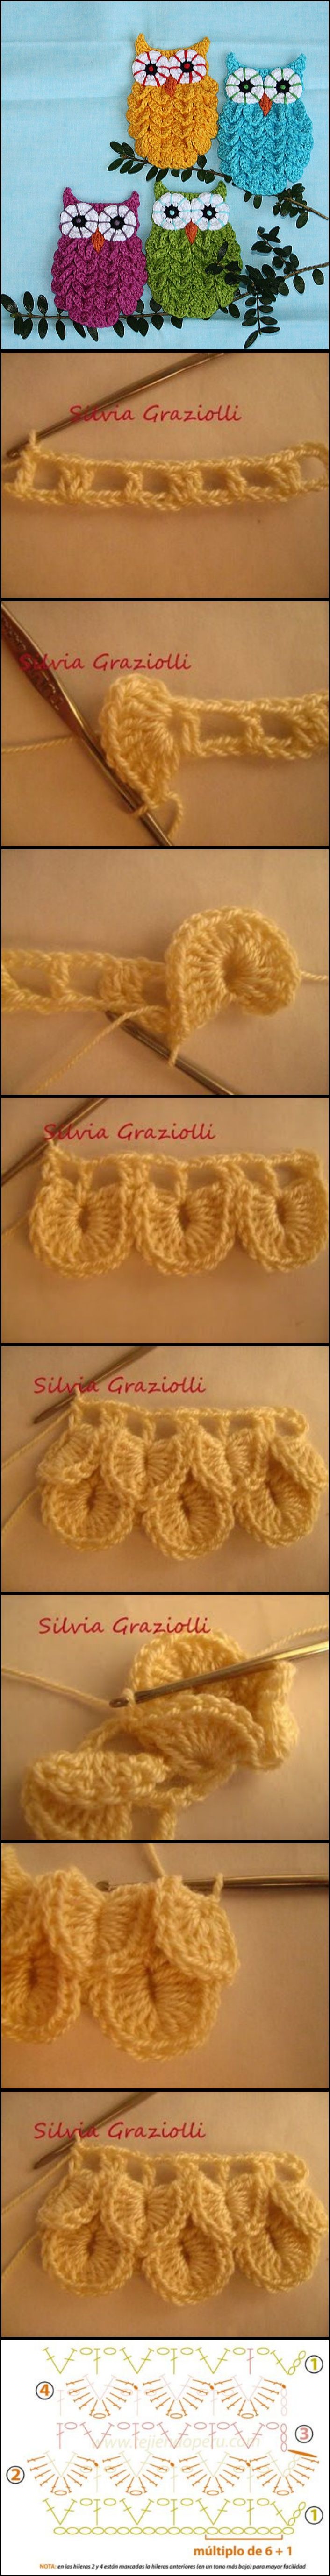 crochet crocodile stitch written instructions